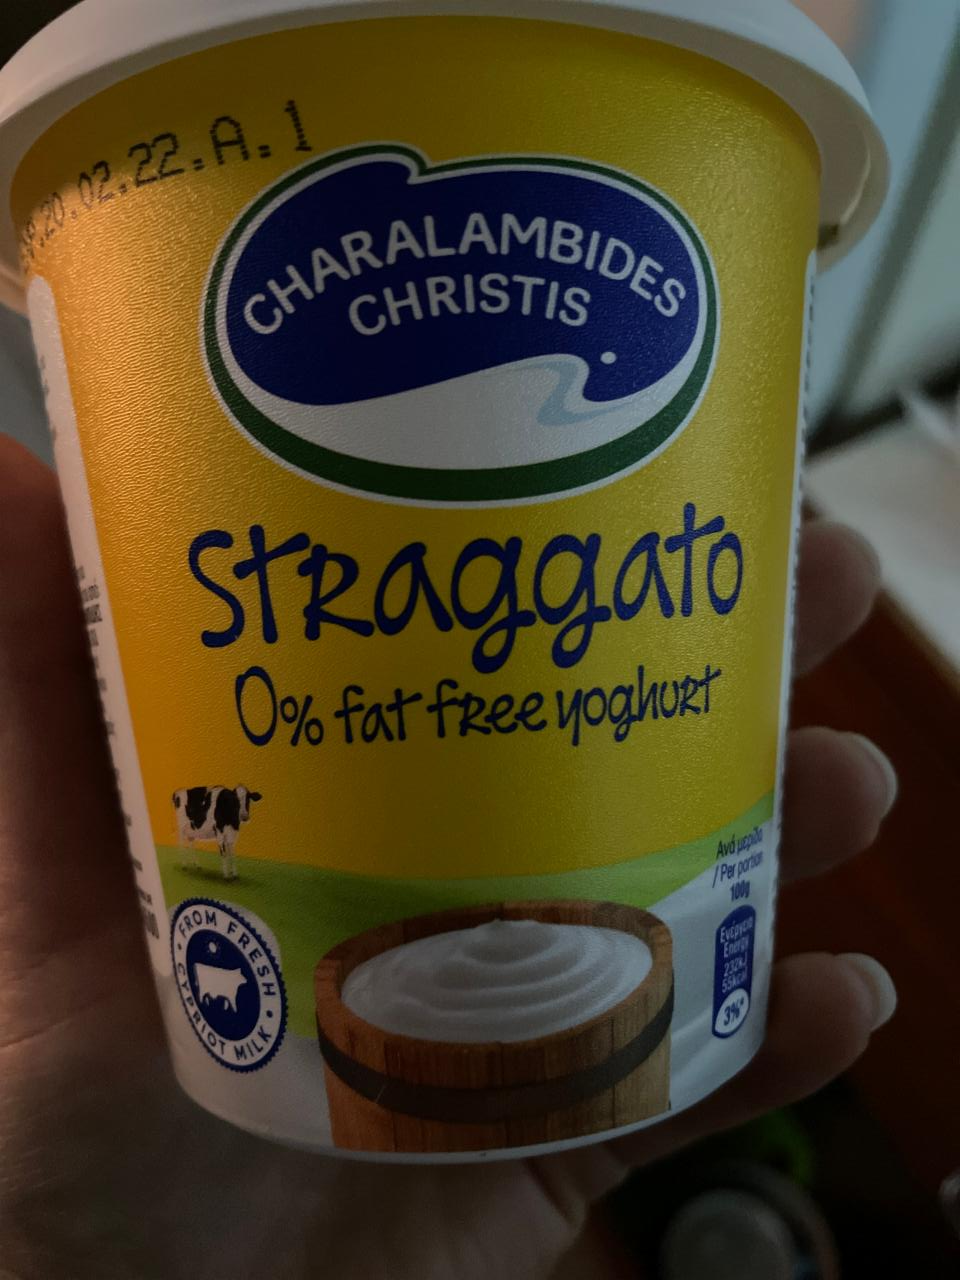 Fotografie - Charalambides christis Straggato 0% fat free yoghurt